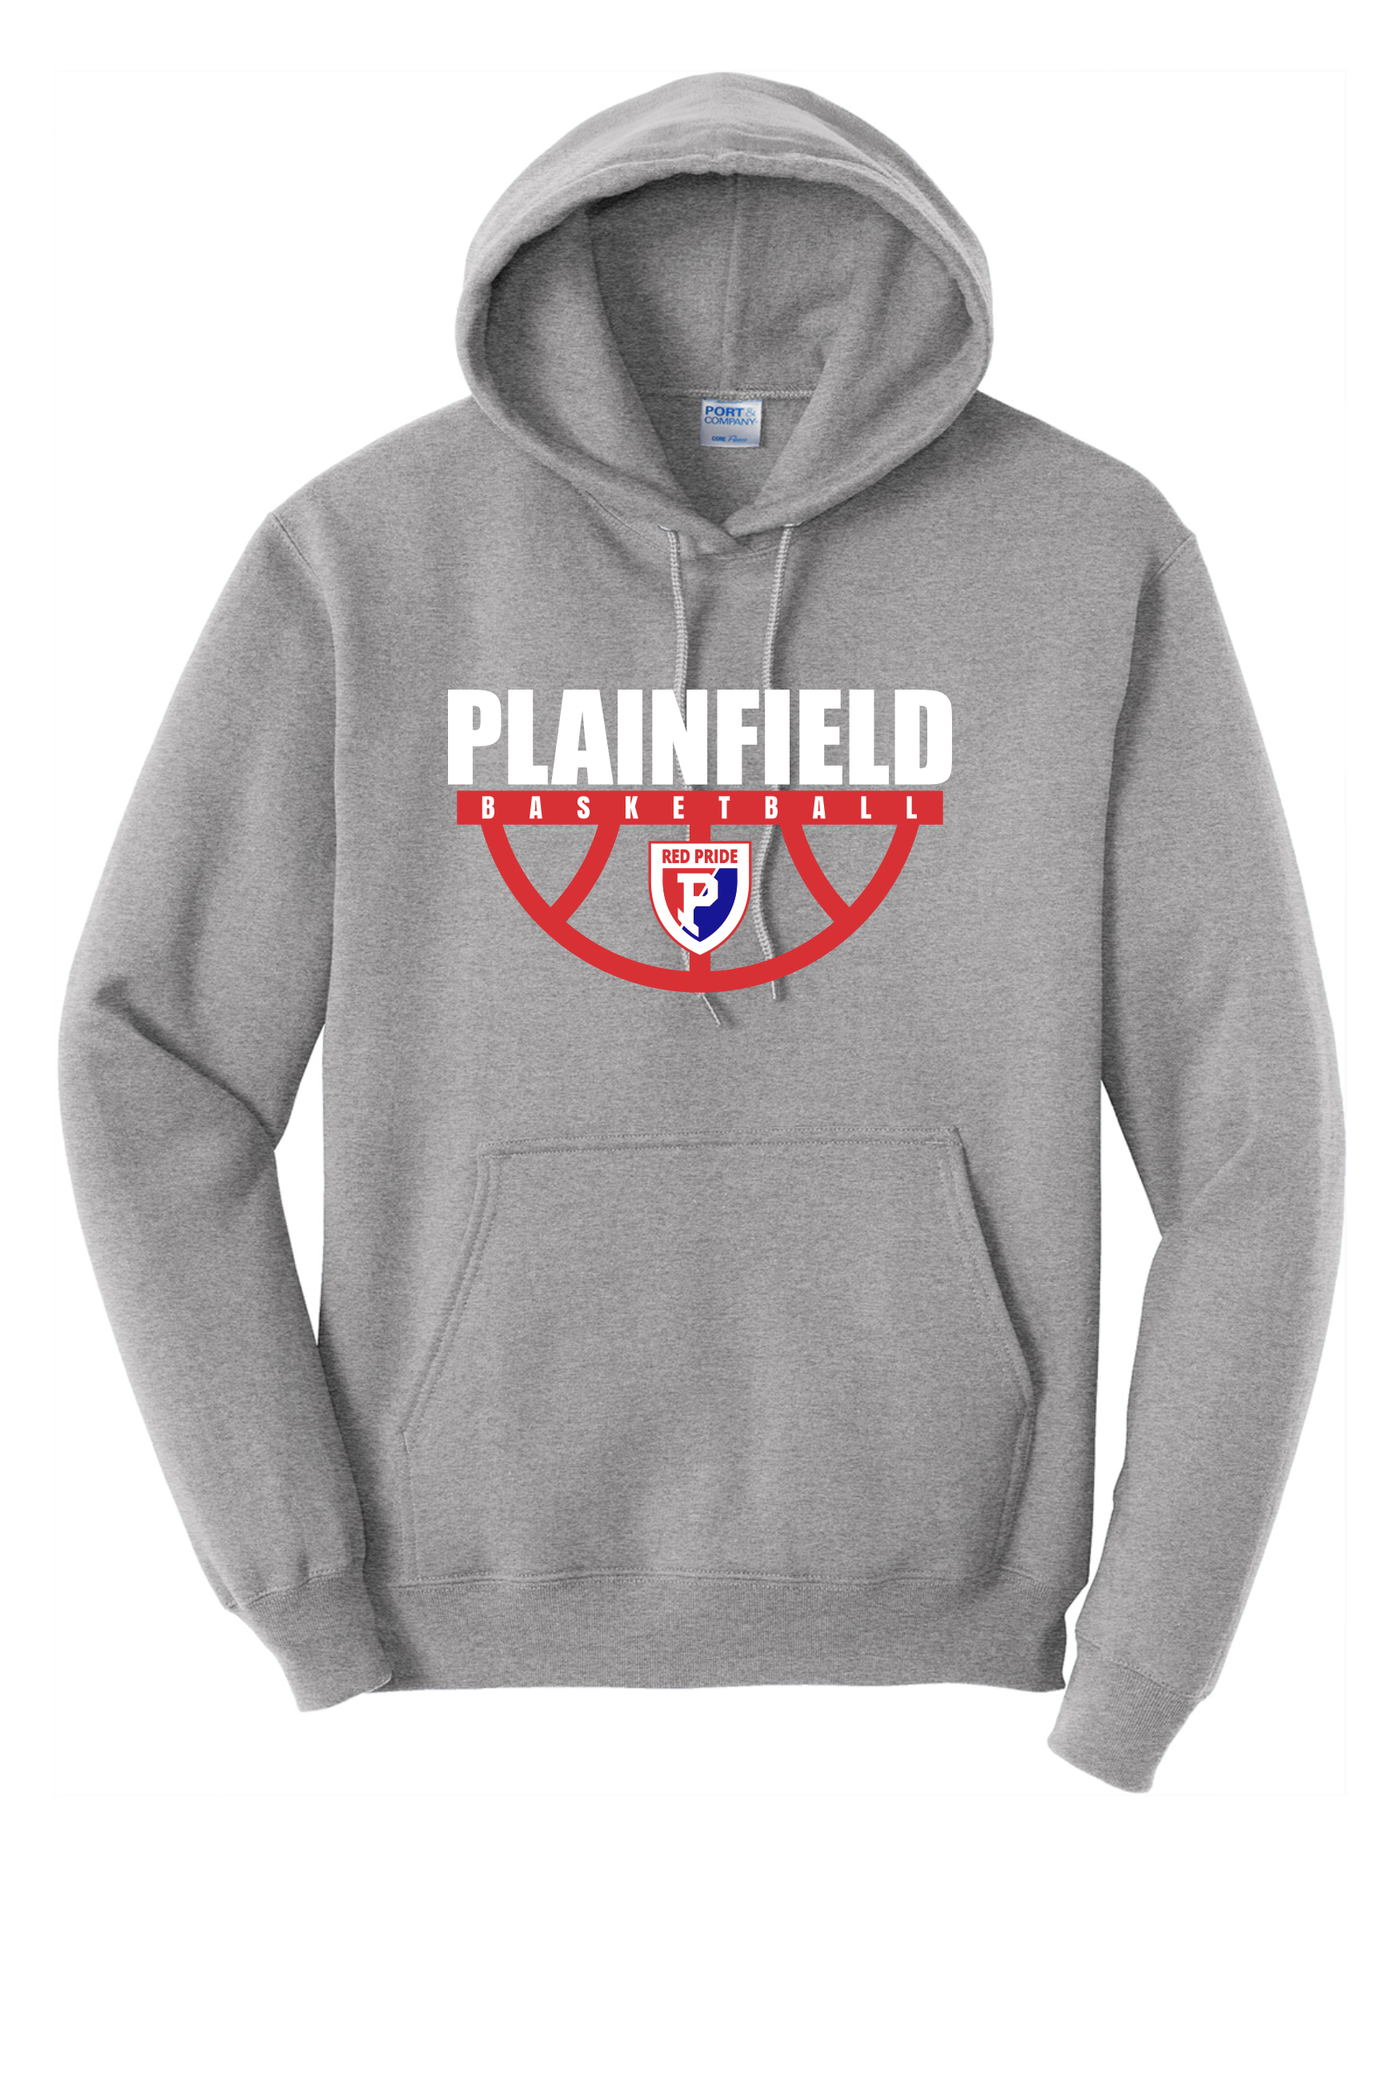 Plainfield Hooded Sweatshirt - H1 YOUTH - Y&S Designs, LLC